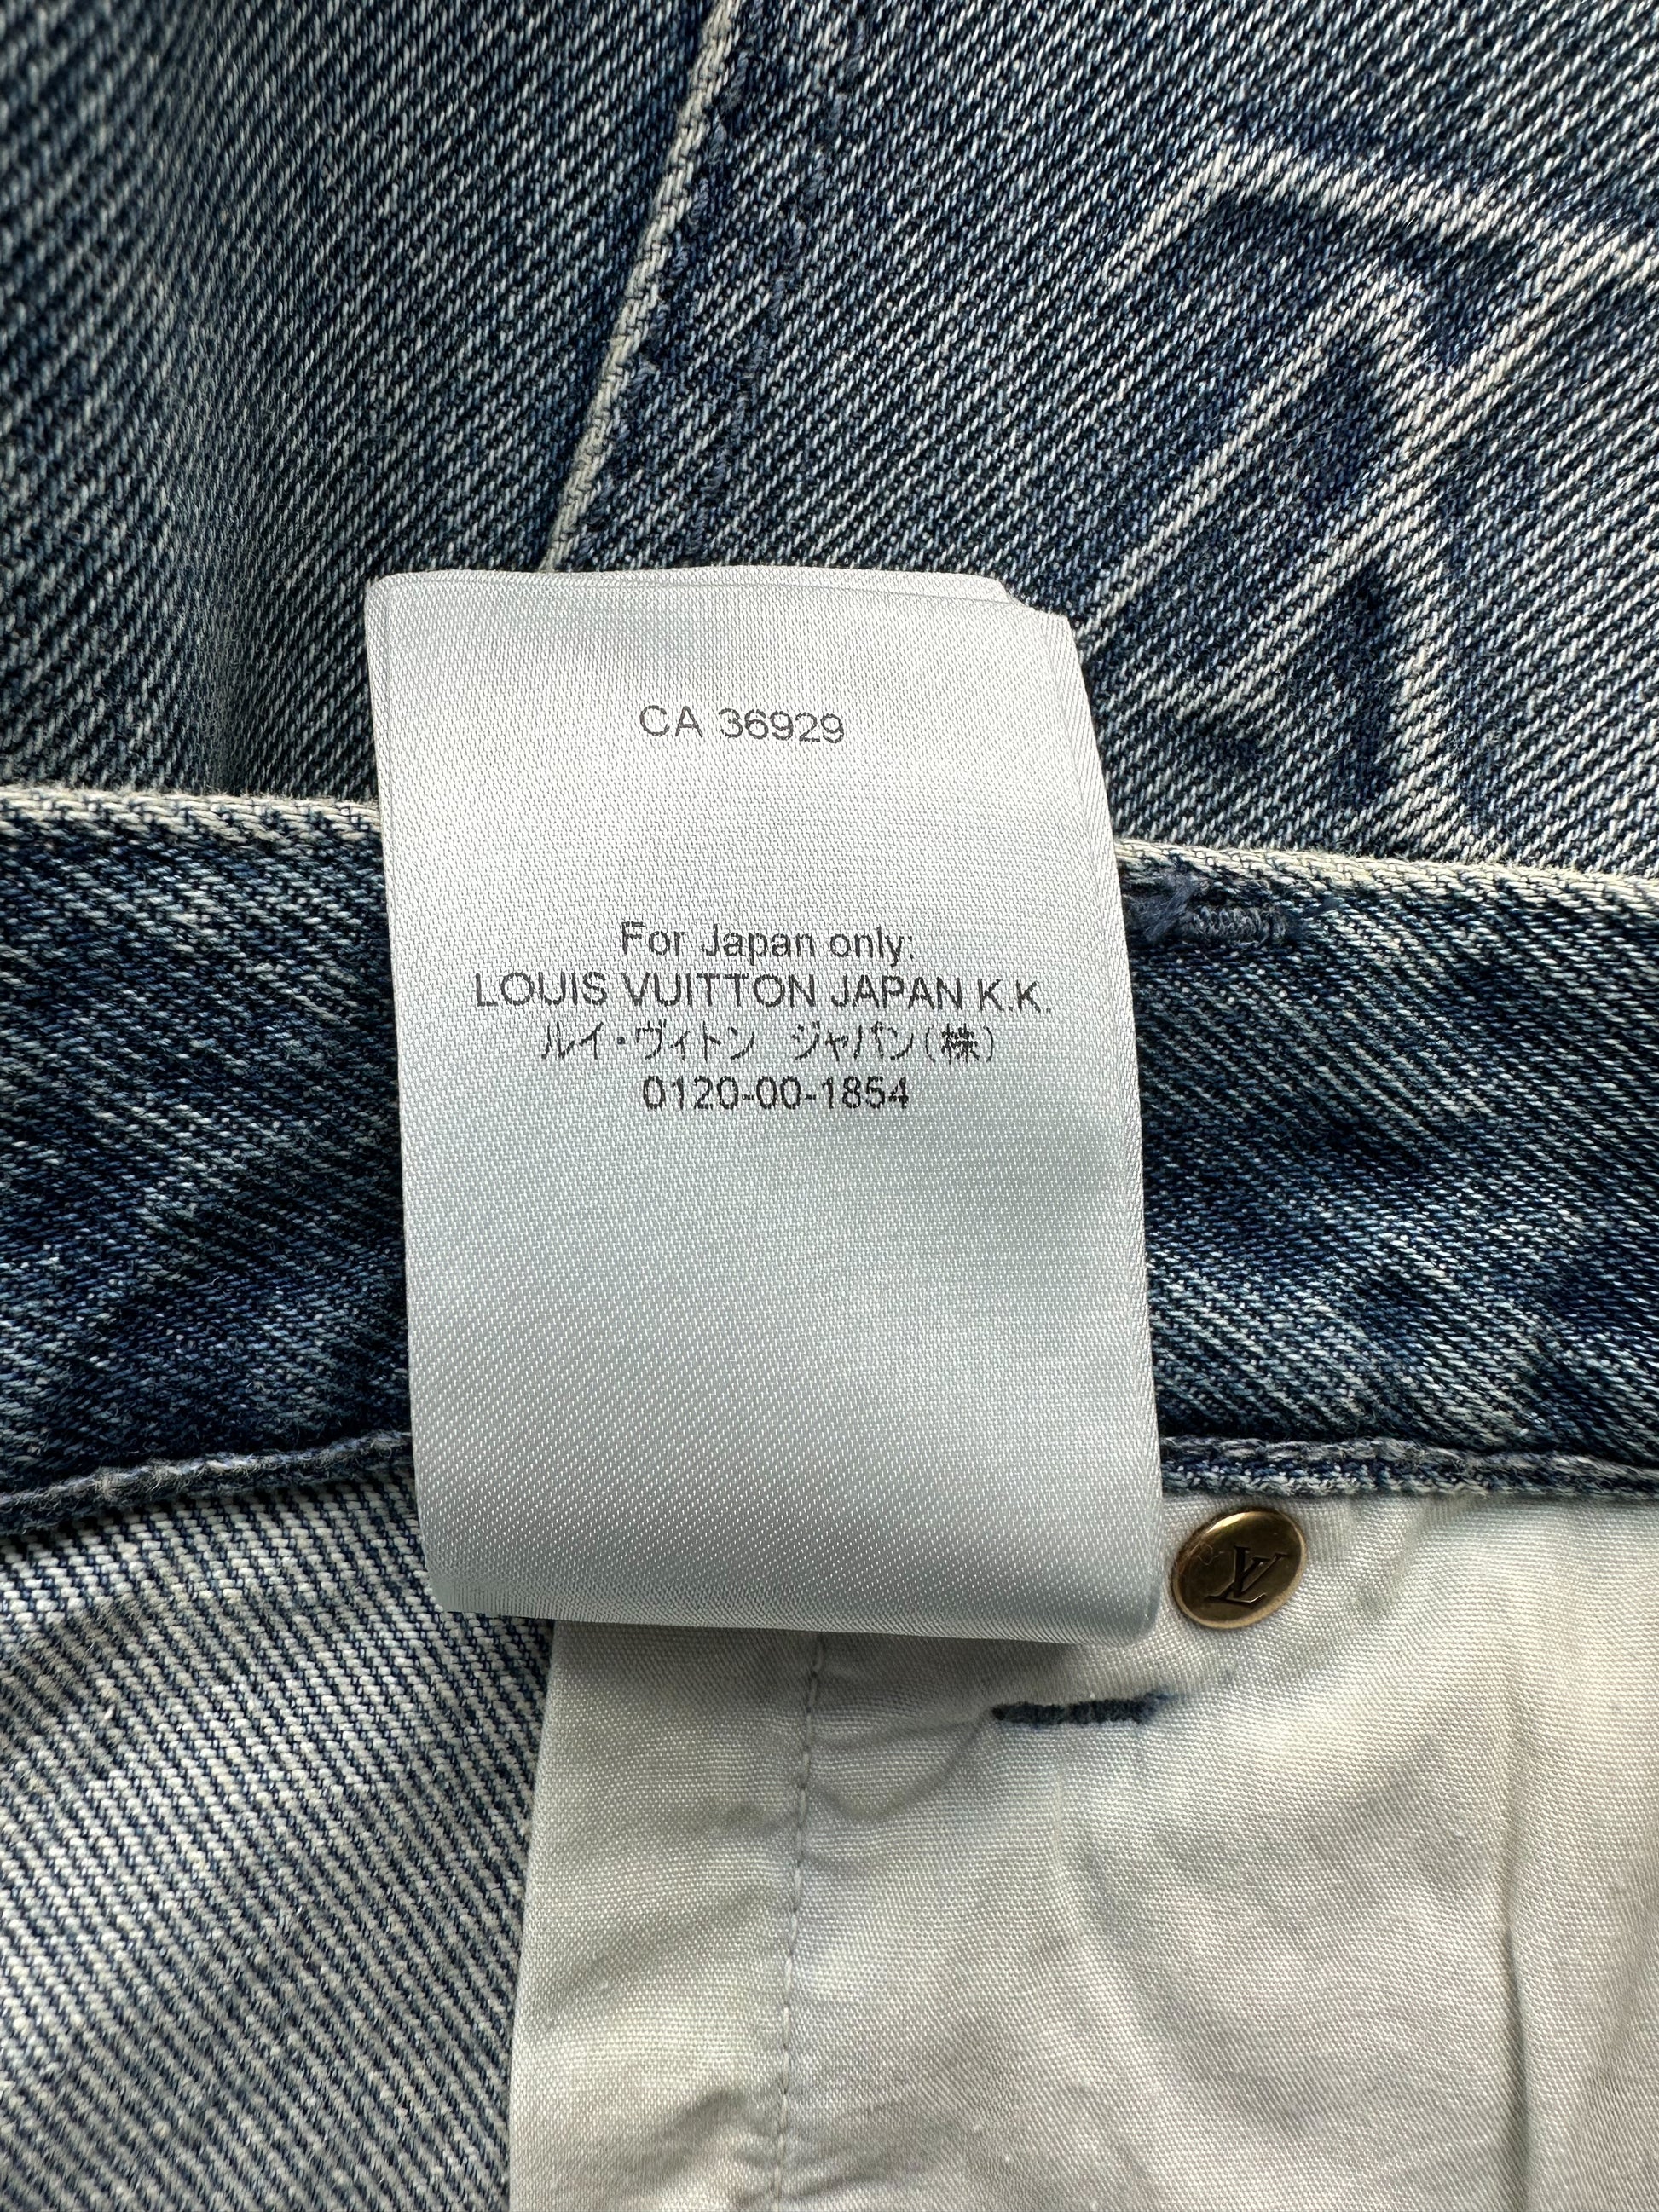 Louis Vuitton LV Monogram Technical Blue Shorts, Cheap Stclaircomo Jordan  outlet